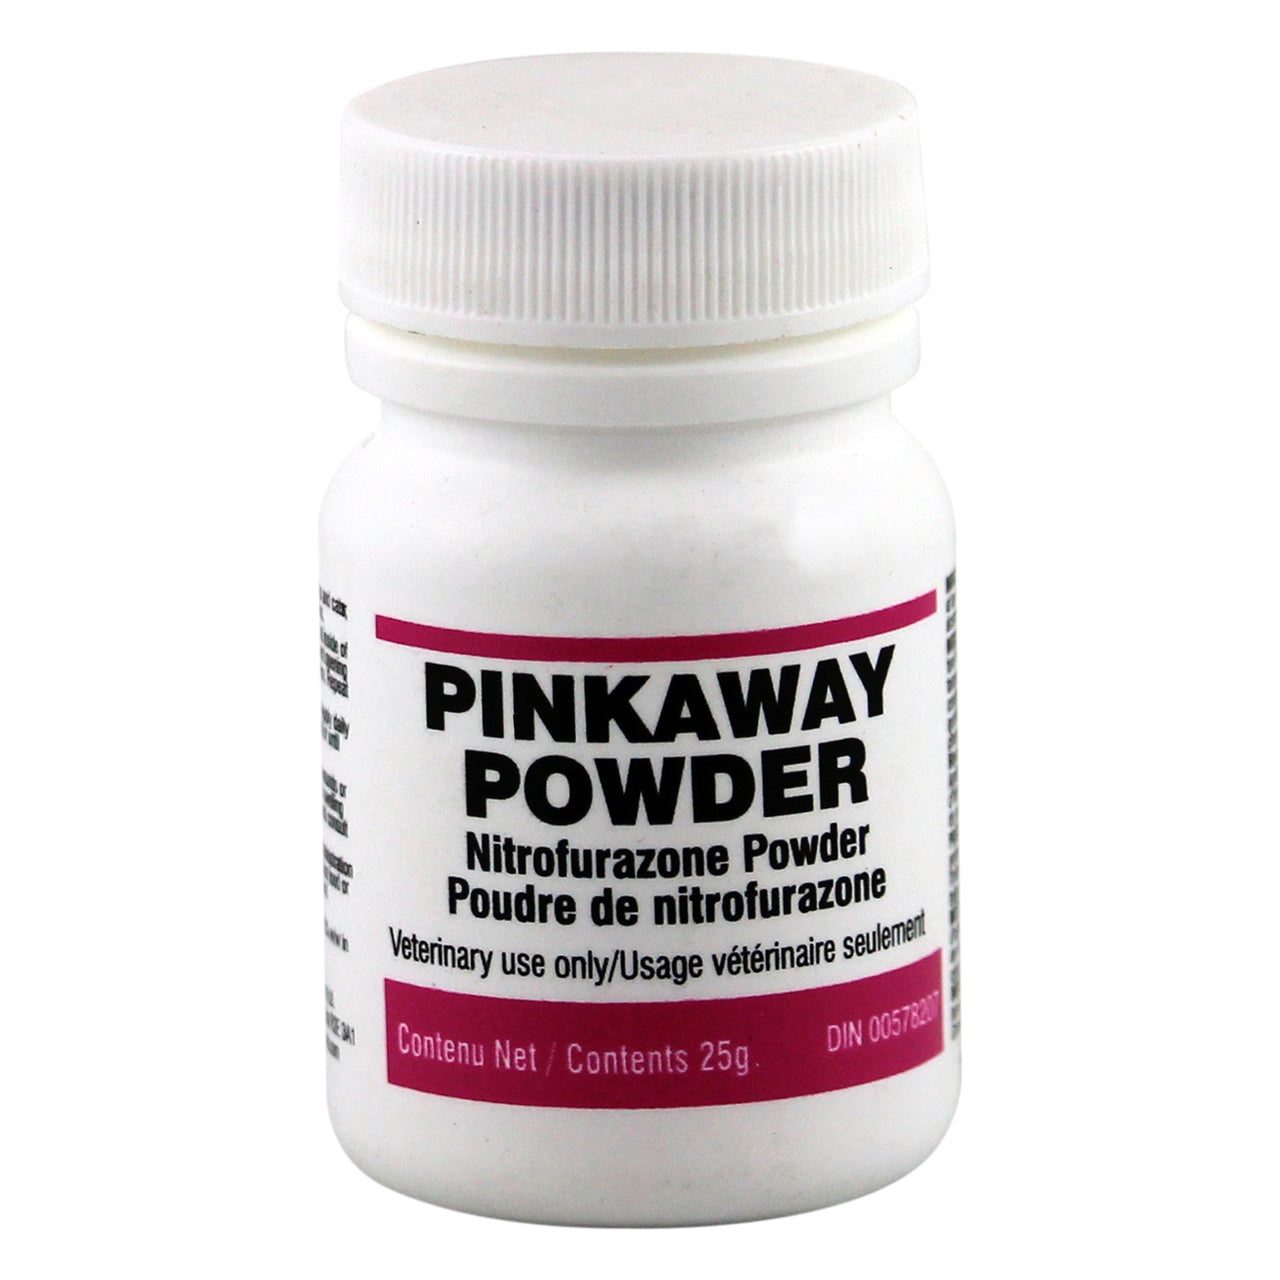 Dvl Pinkaway Powder (Nitrofurazone 0.2%) 50G - Pharmaceuticals Dvl - Canada